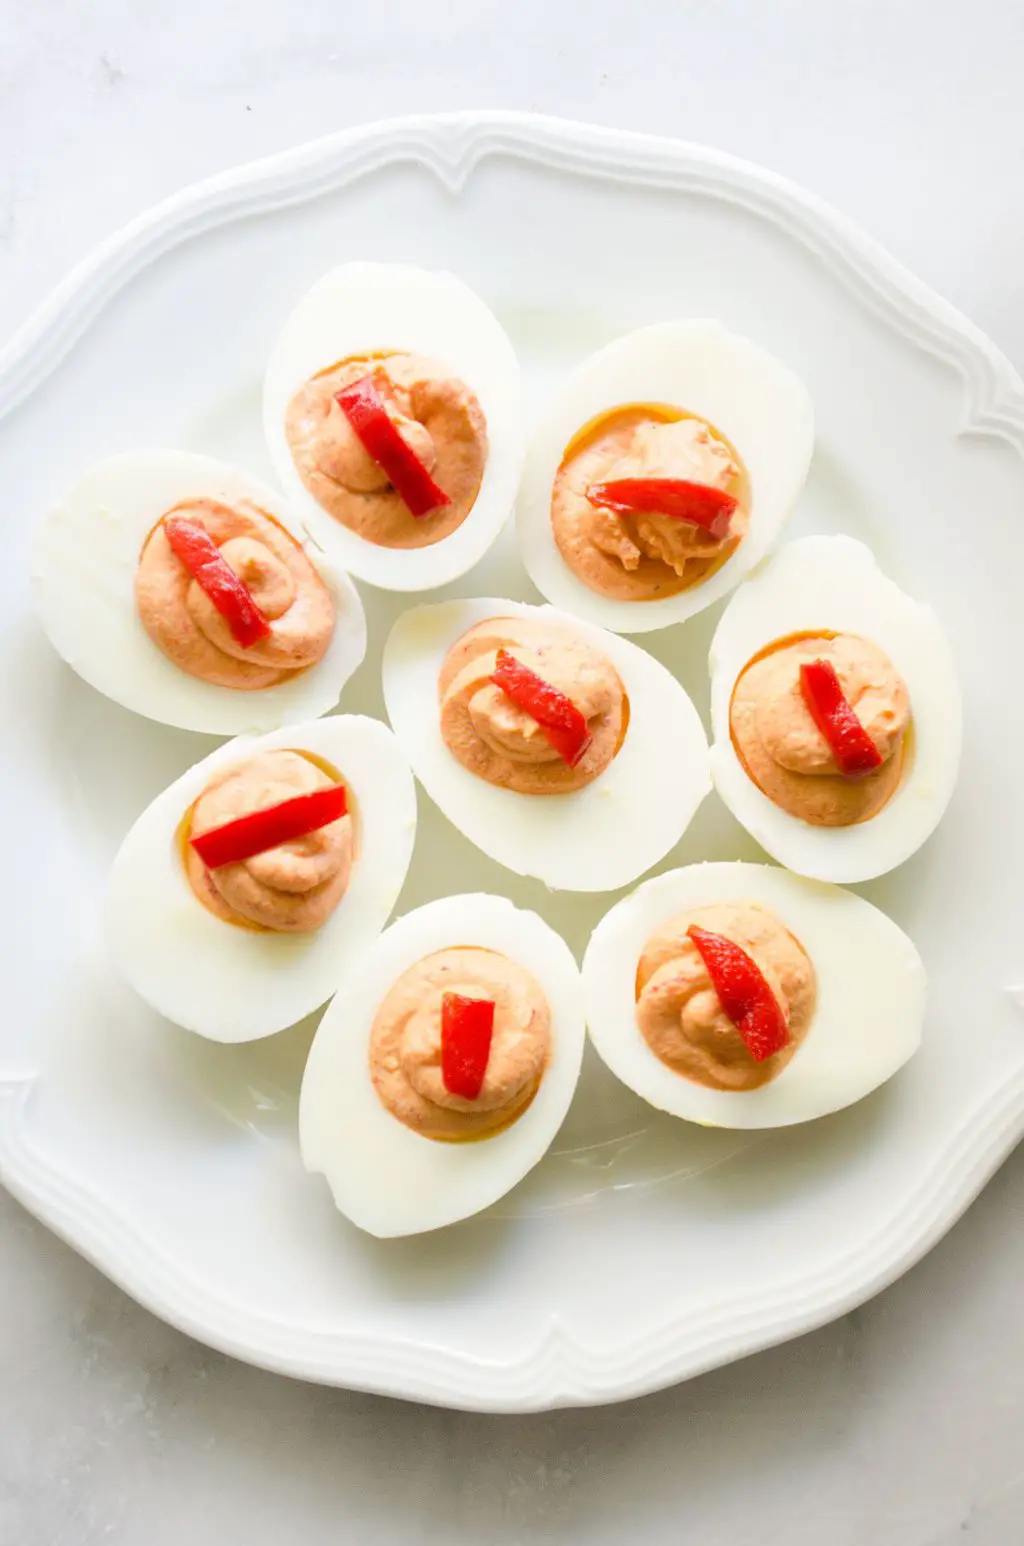 Mayonnaise-free roasted piquillo pepper deviled eggs recipe via @thouswellblog